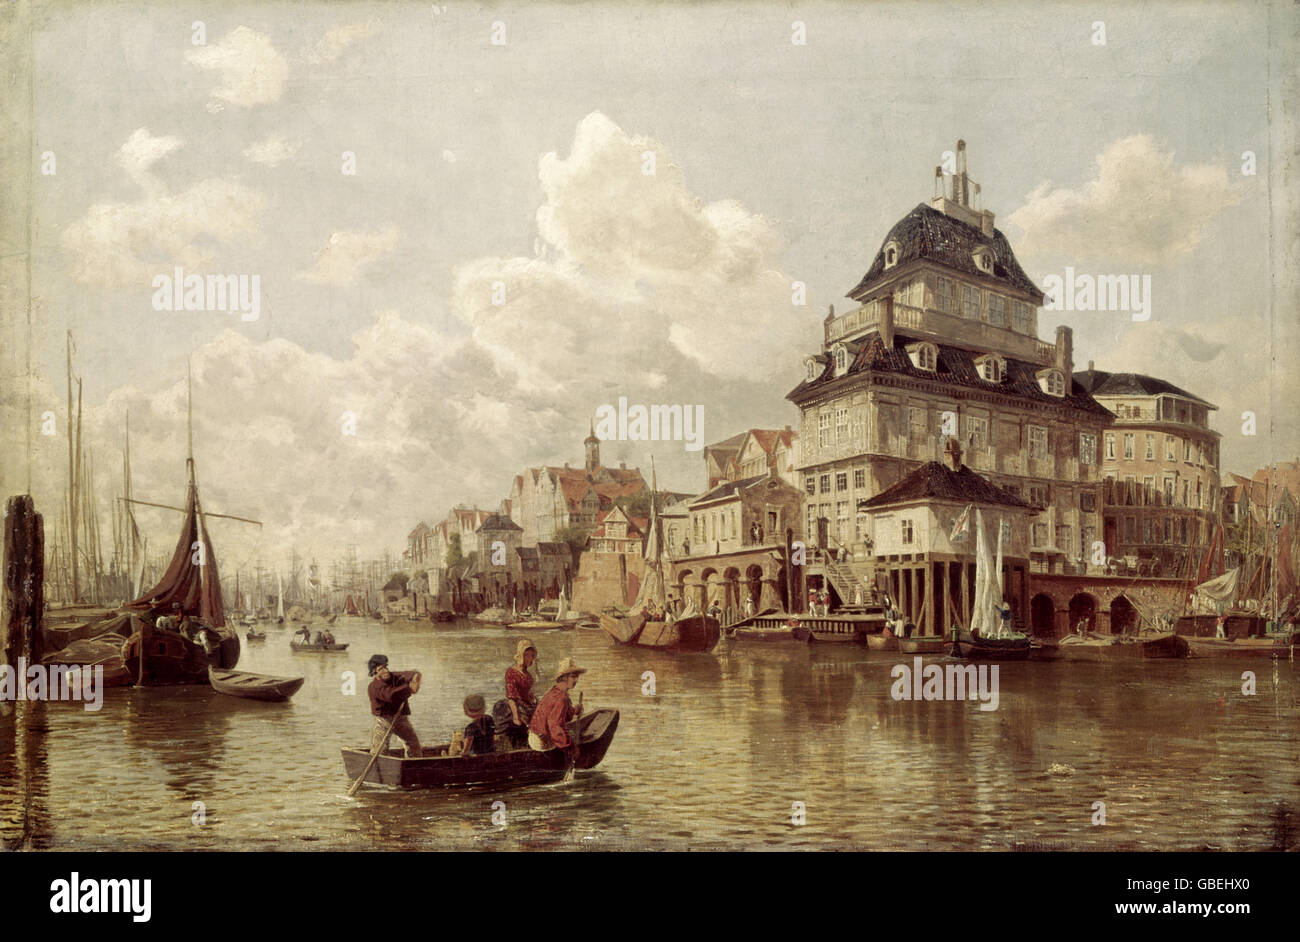 Bildende Kunst, Ruths, Johann Georg Valentin, (1825-1905), Malerei, "The Boat House am Hamburger Hafen", 1850, Öl auf Leinwand, Kunsthalle Hamburg, Deutschland, Stockfoto